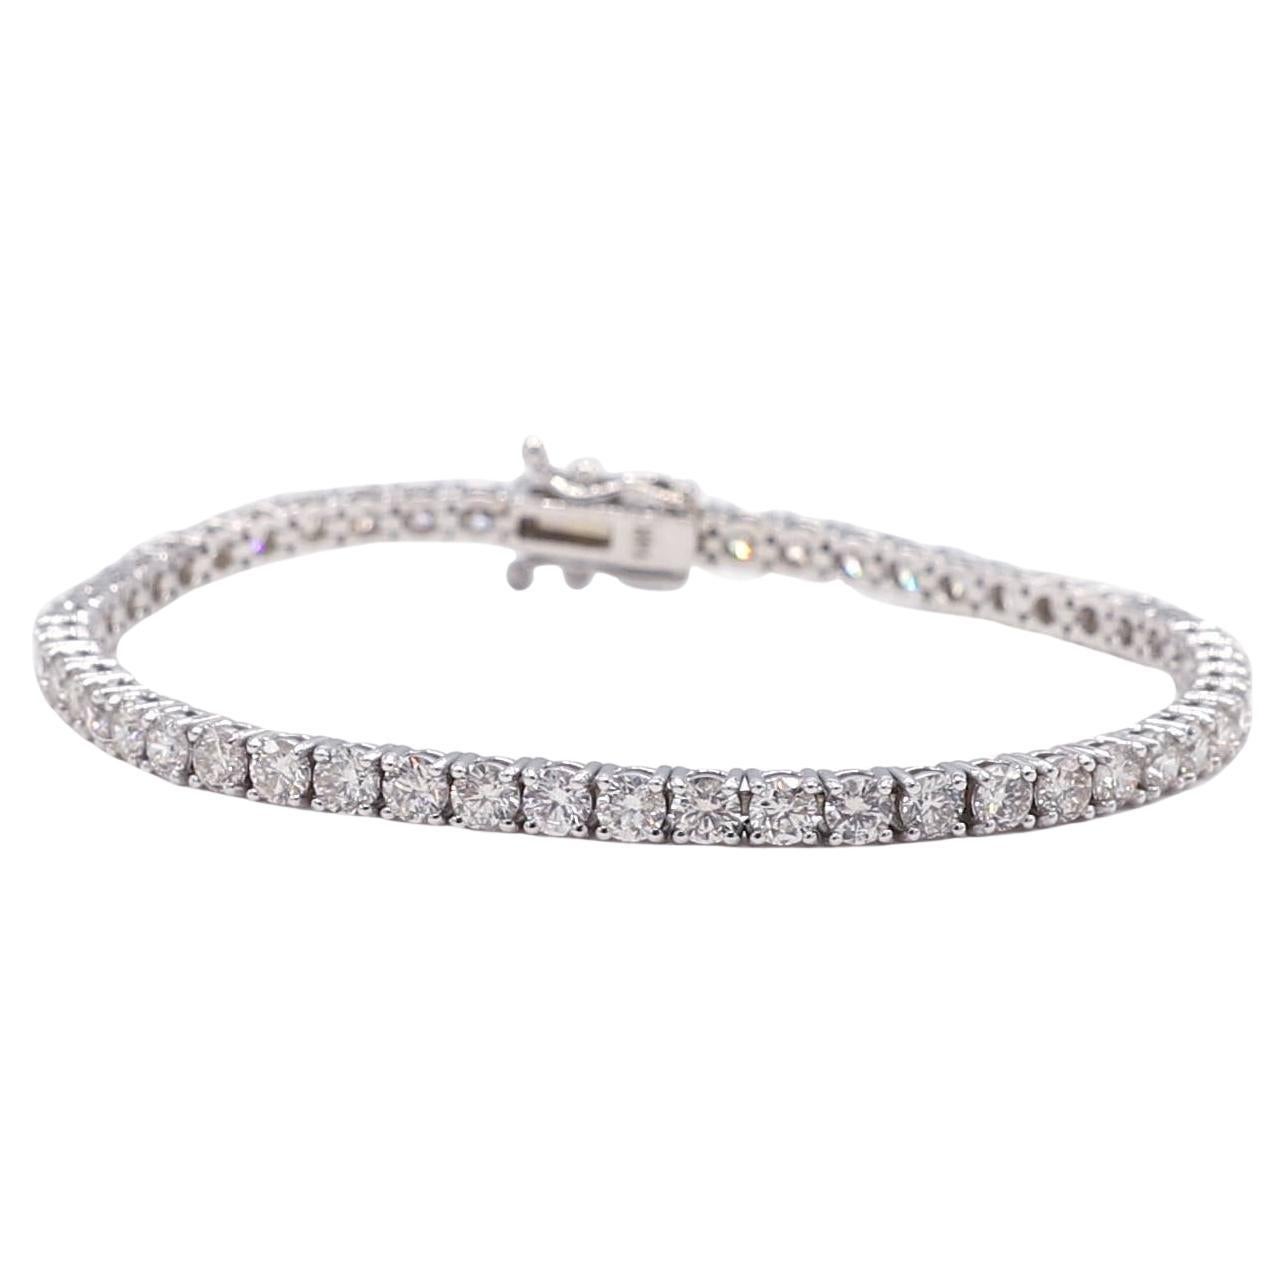 Bracelet tennis en or blanc 14 carats avec diamants naturels ronds de 5,65 carats